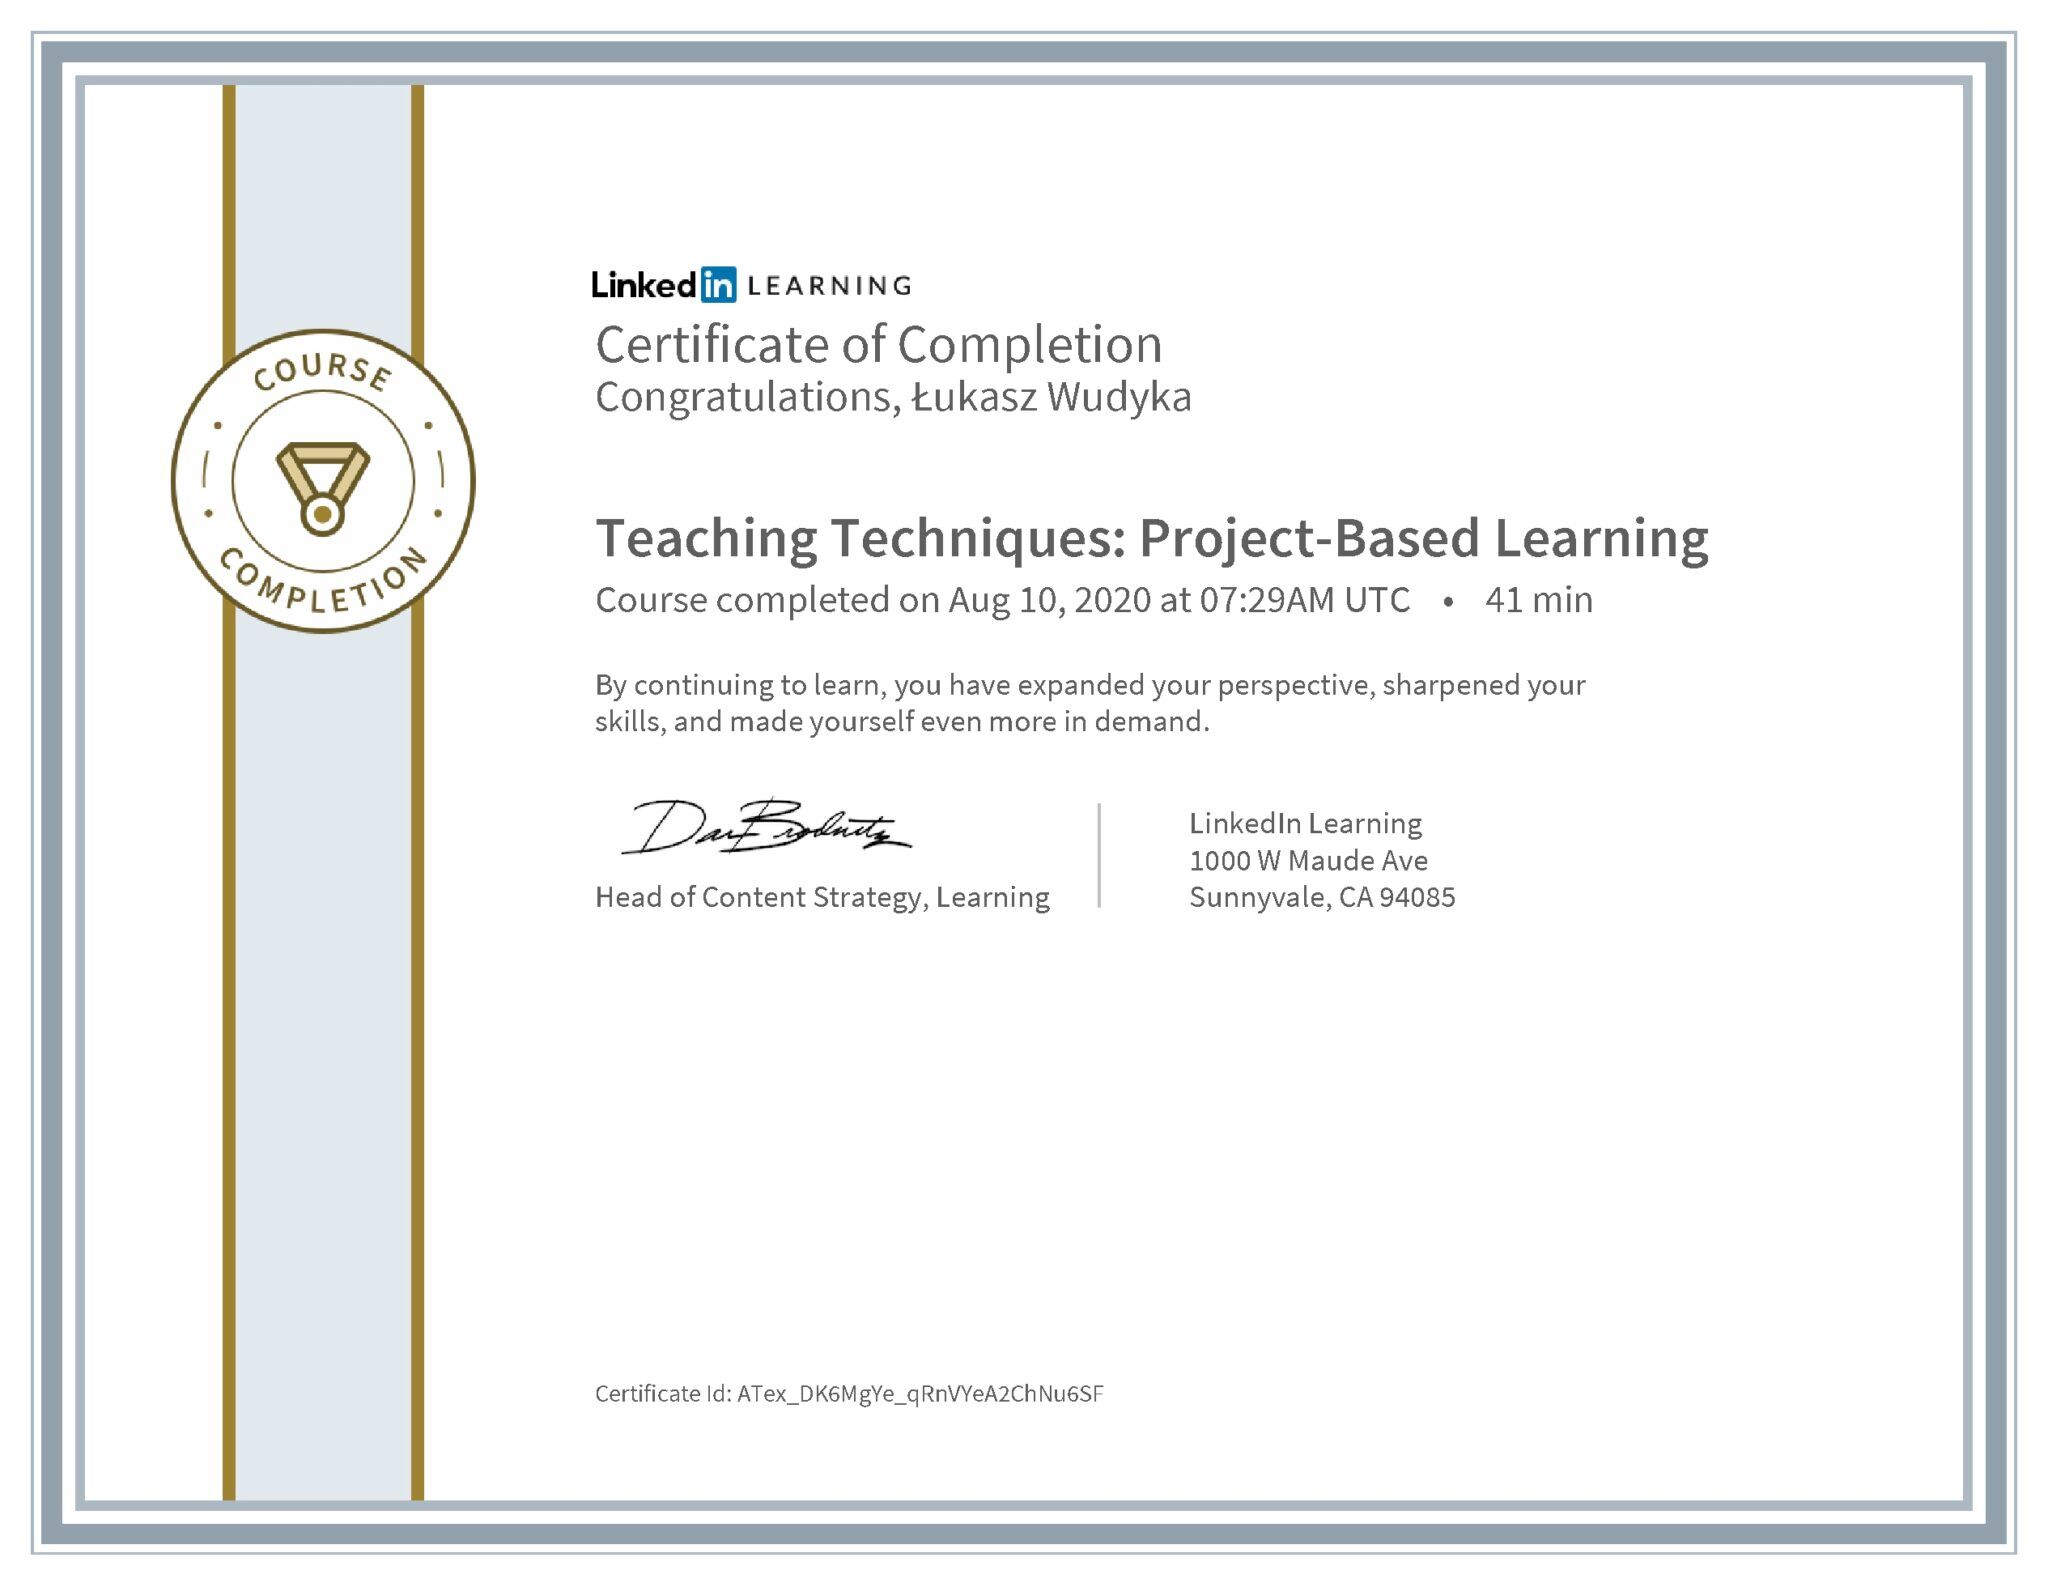 Łukasz Wudyka certyfikat LinkedIn Teaching Techniques: Project-Based Learning